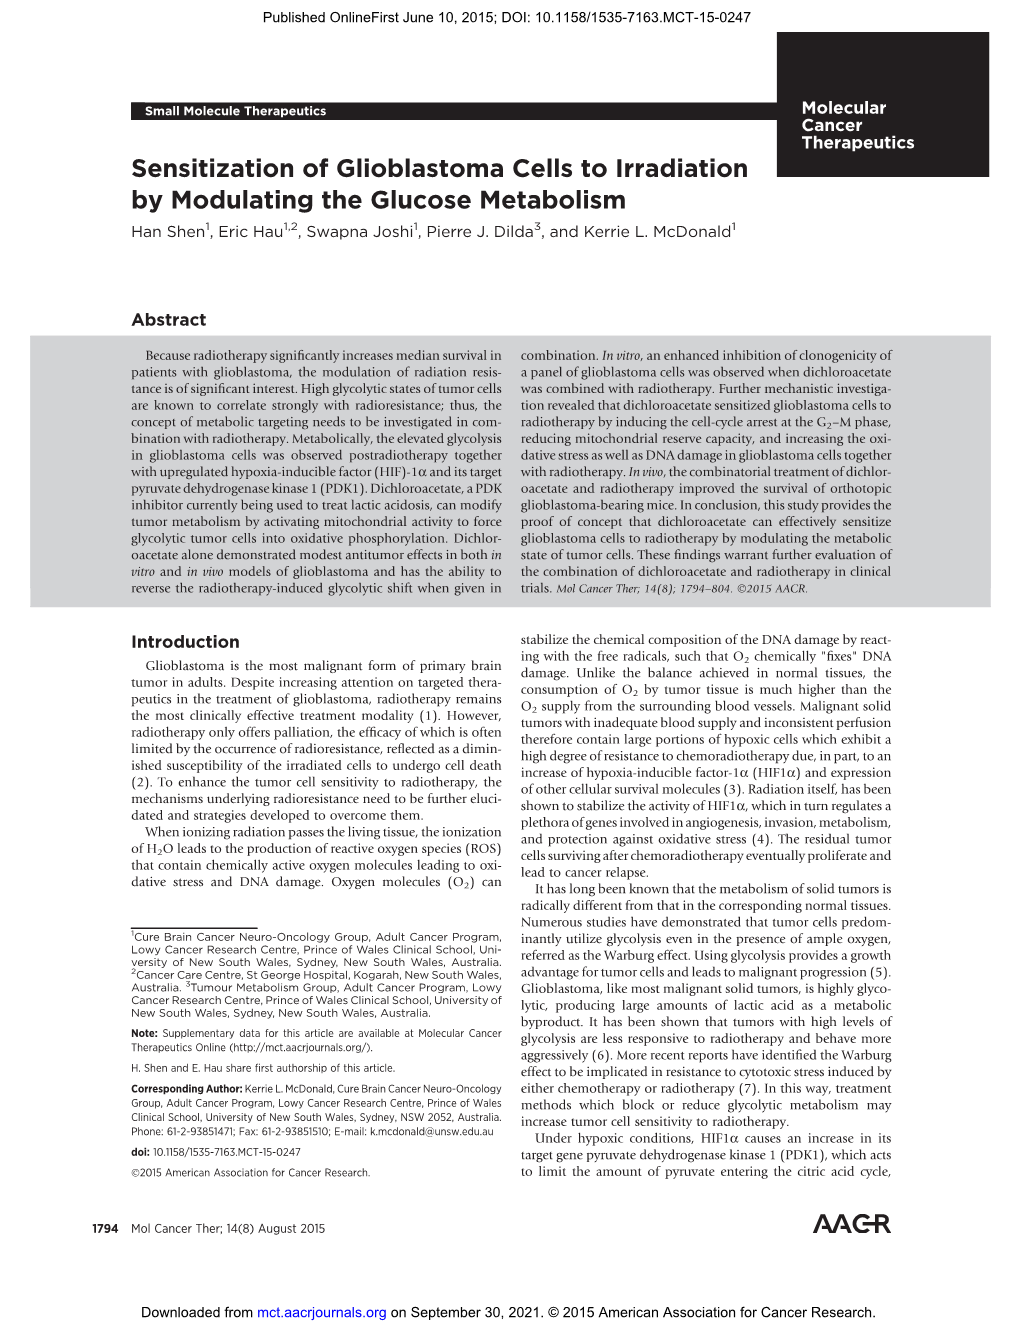 Sensitization of Glioblastoma Cells to Irradiation by Modulating the Glucose Metabolism Han Shen1, Eric Hau1,2, Swapna Joshi1, Pierre J